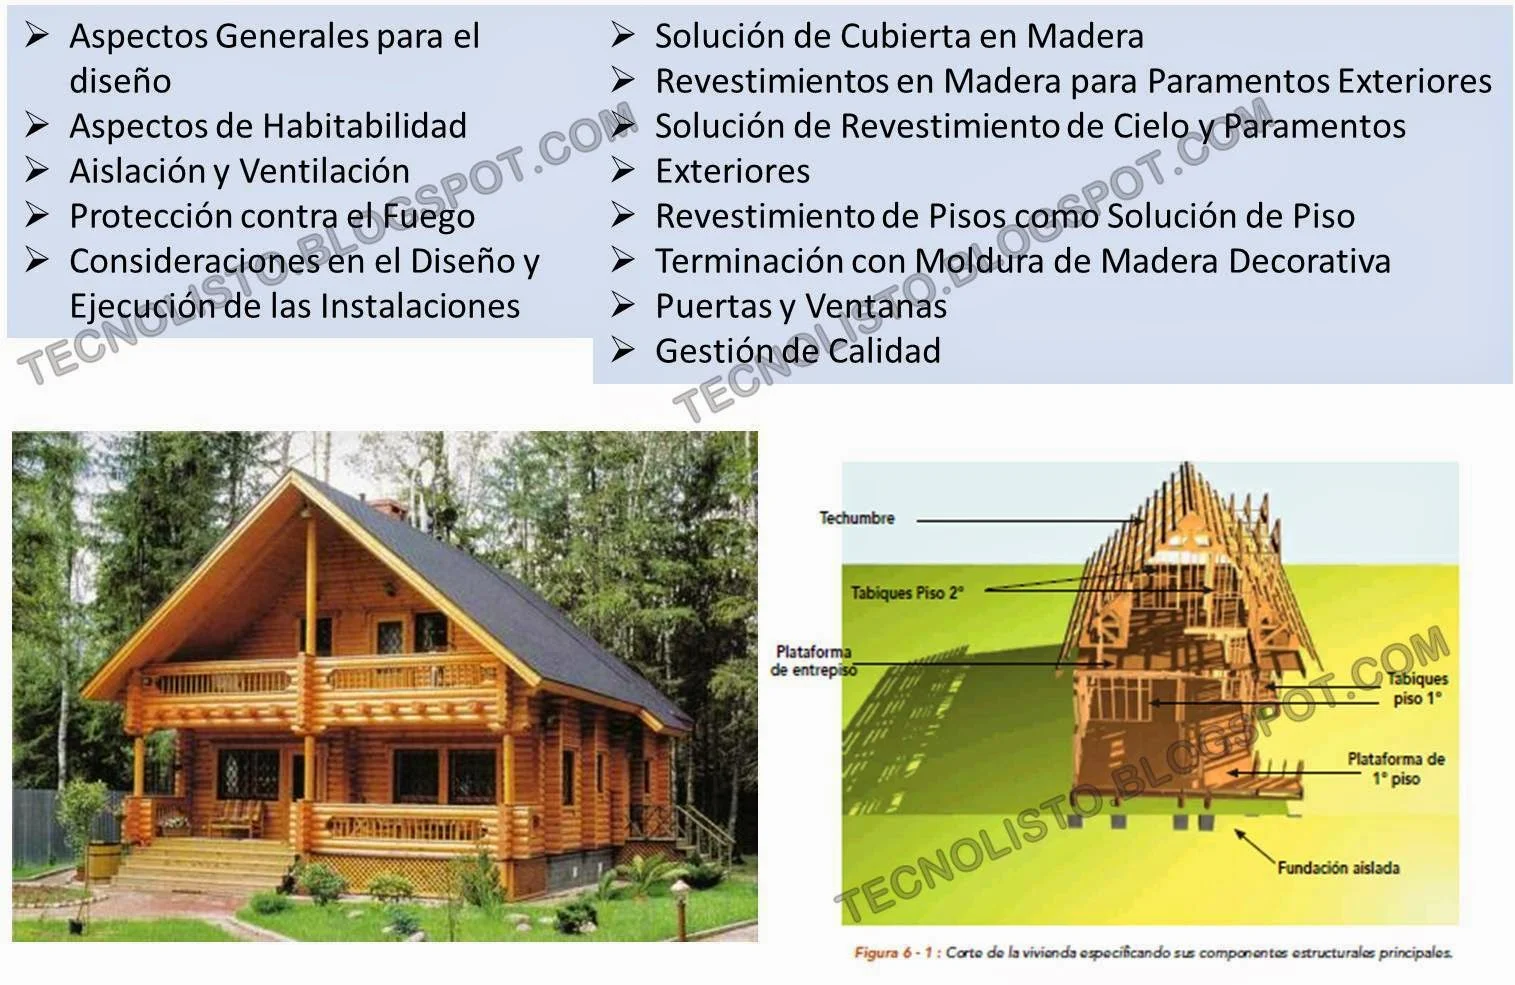 "Estructura de casas de madera"